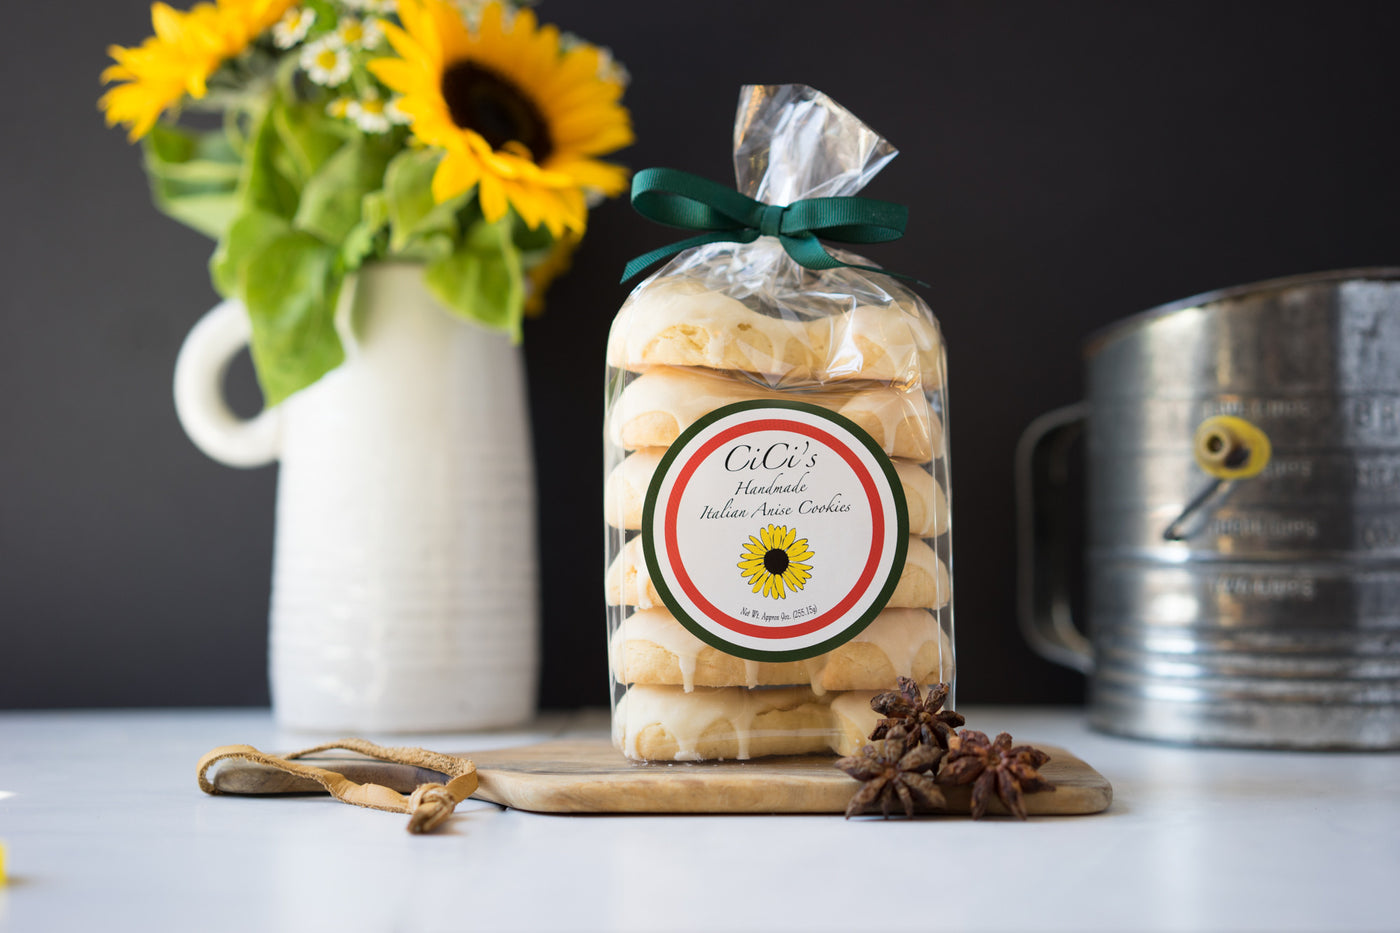 CiCi's Italian Anise Cookies